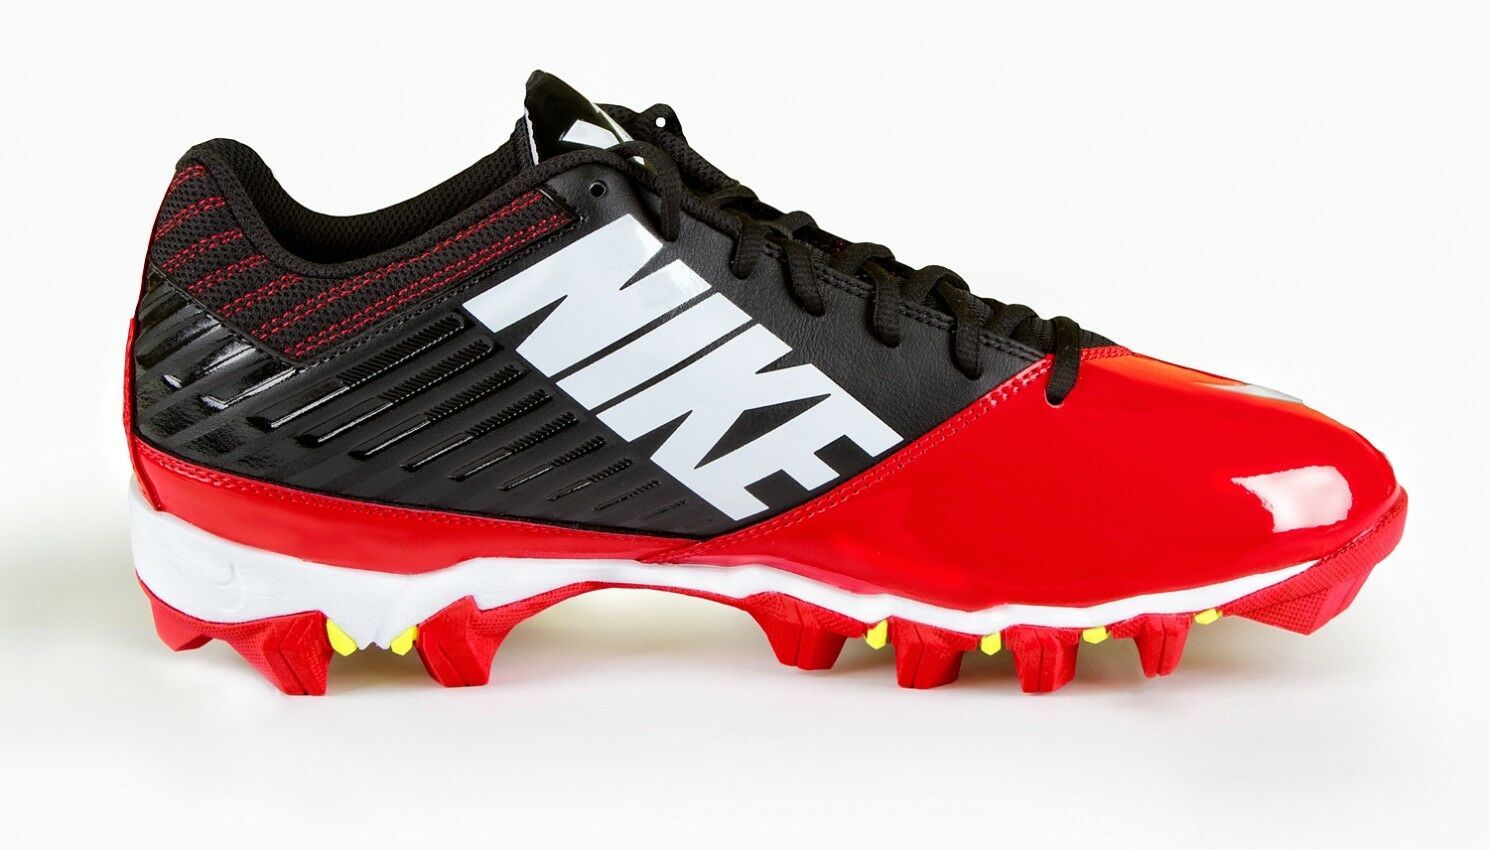 New Nike Men's Vapor Shark Football Cleats Red Variety Sizes